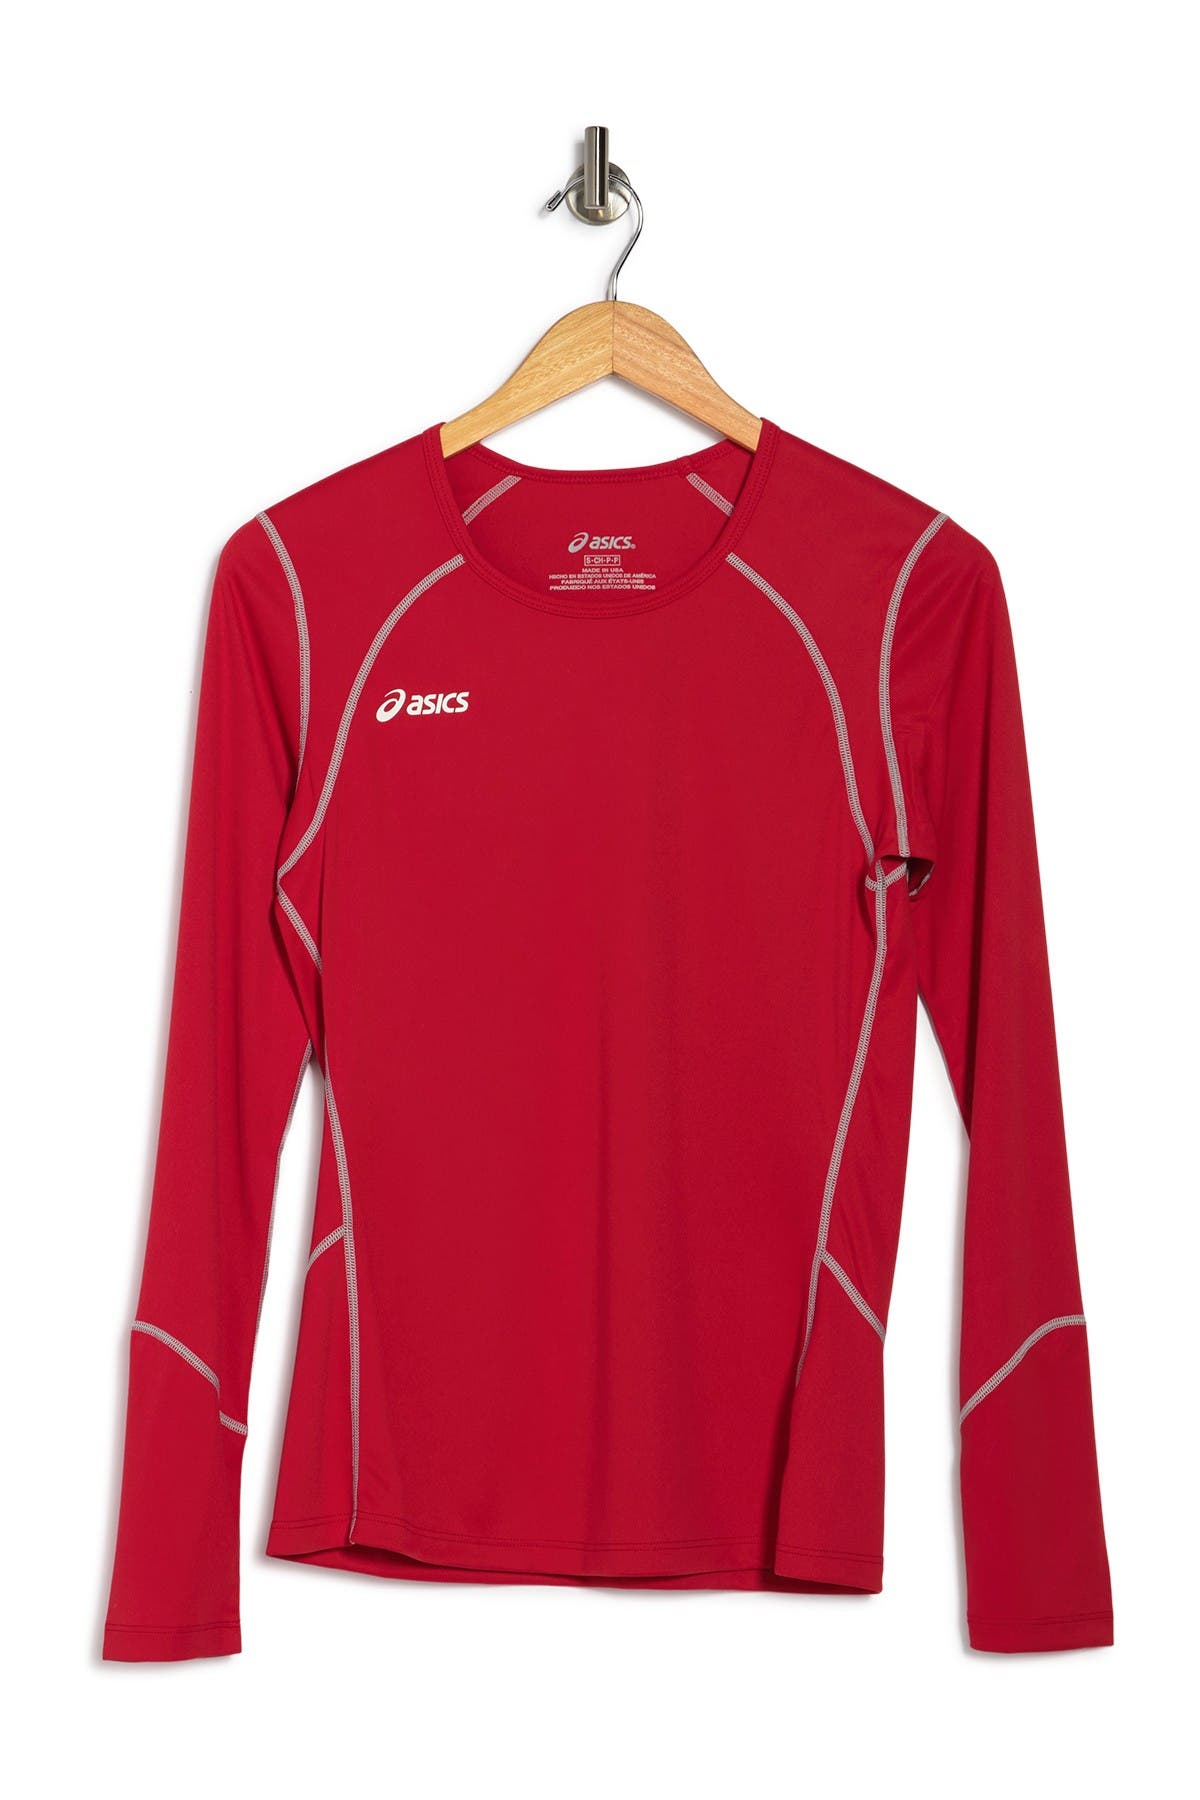 Asics Volleycross Long Sleeve Jersey In Red/steel Grey